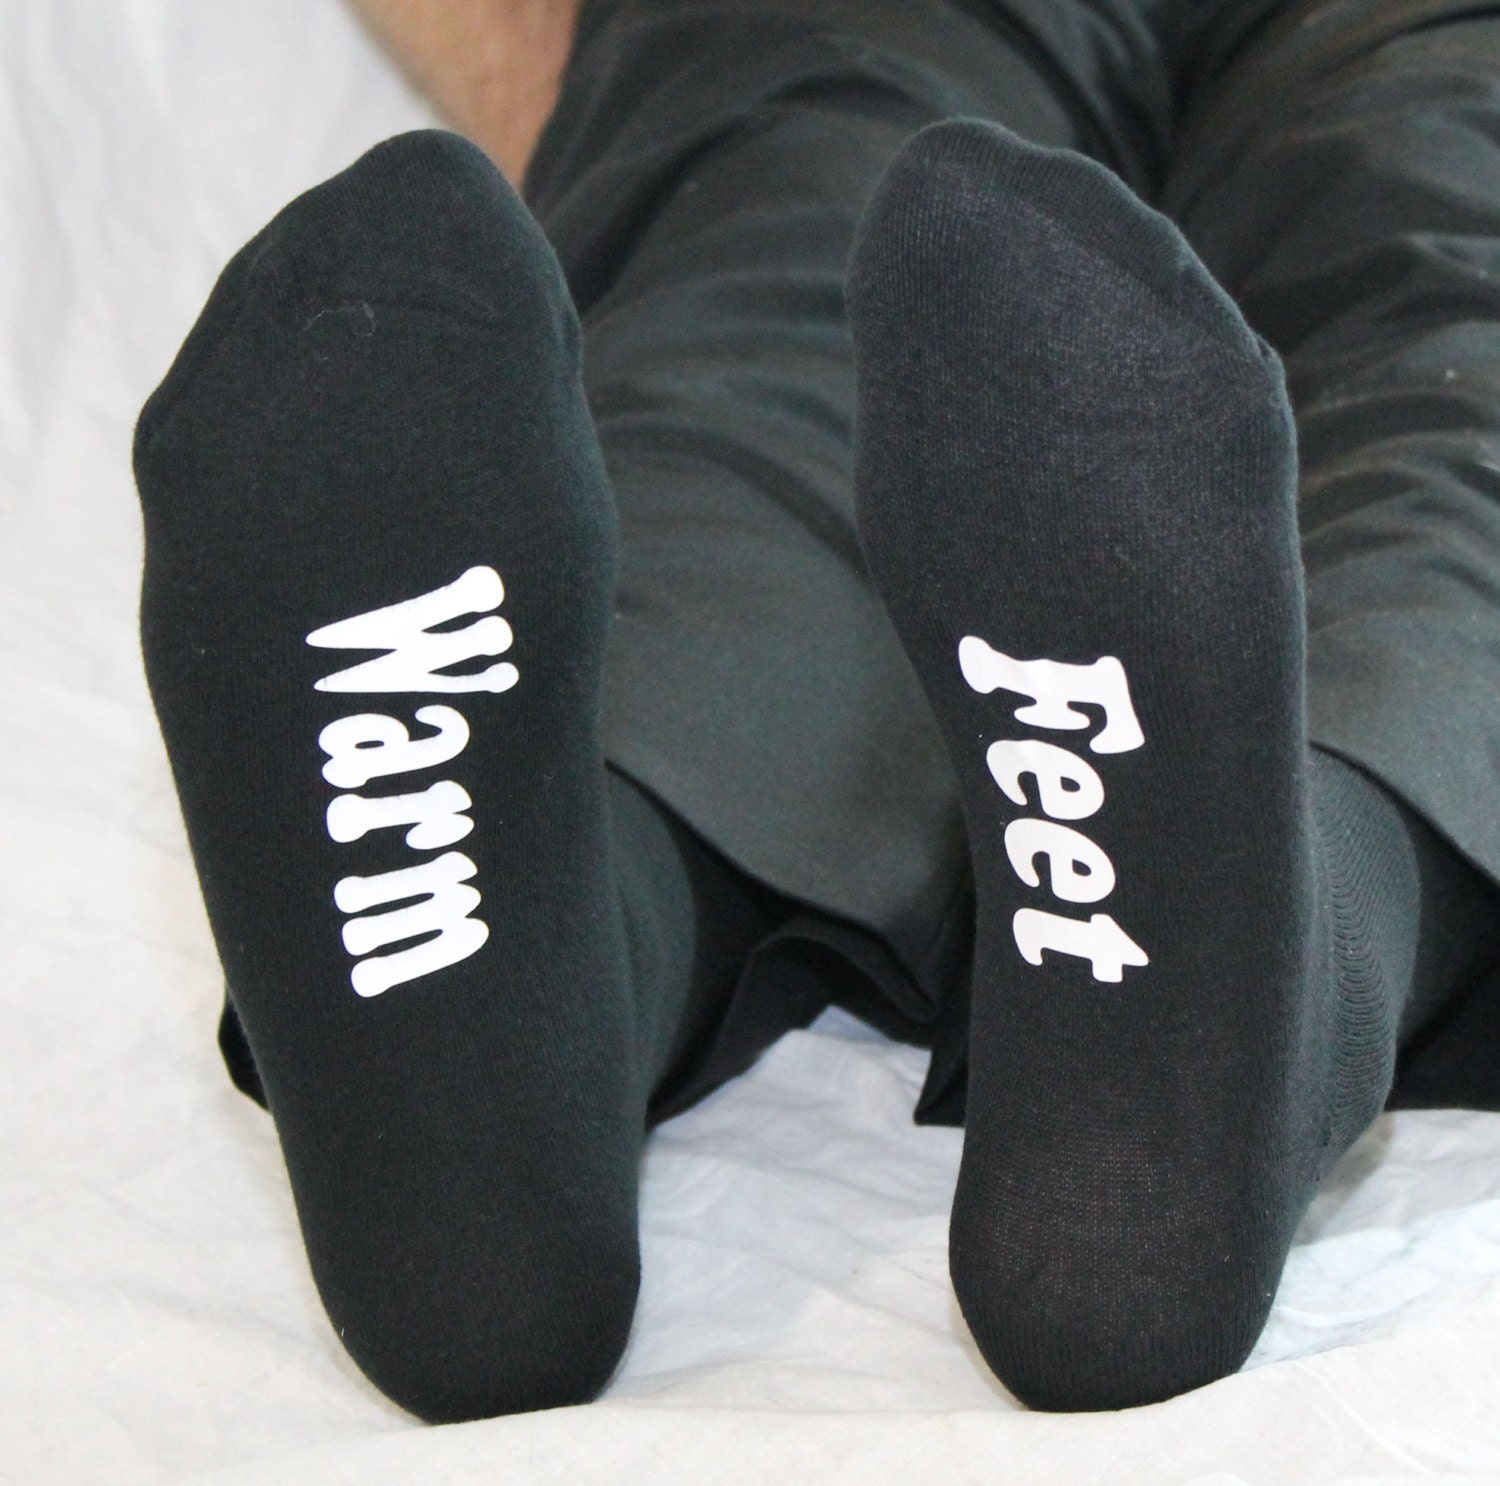 Groom Socks Warm Feet Wedding Socks Groom Gift by LetteringMania